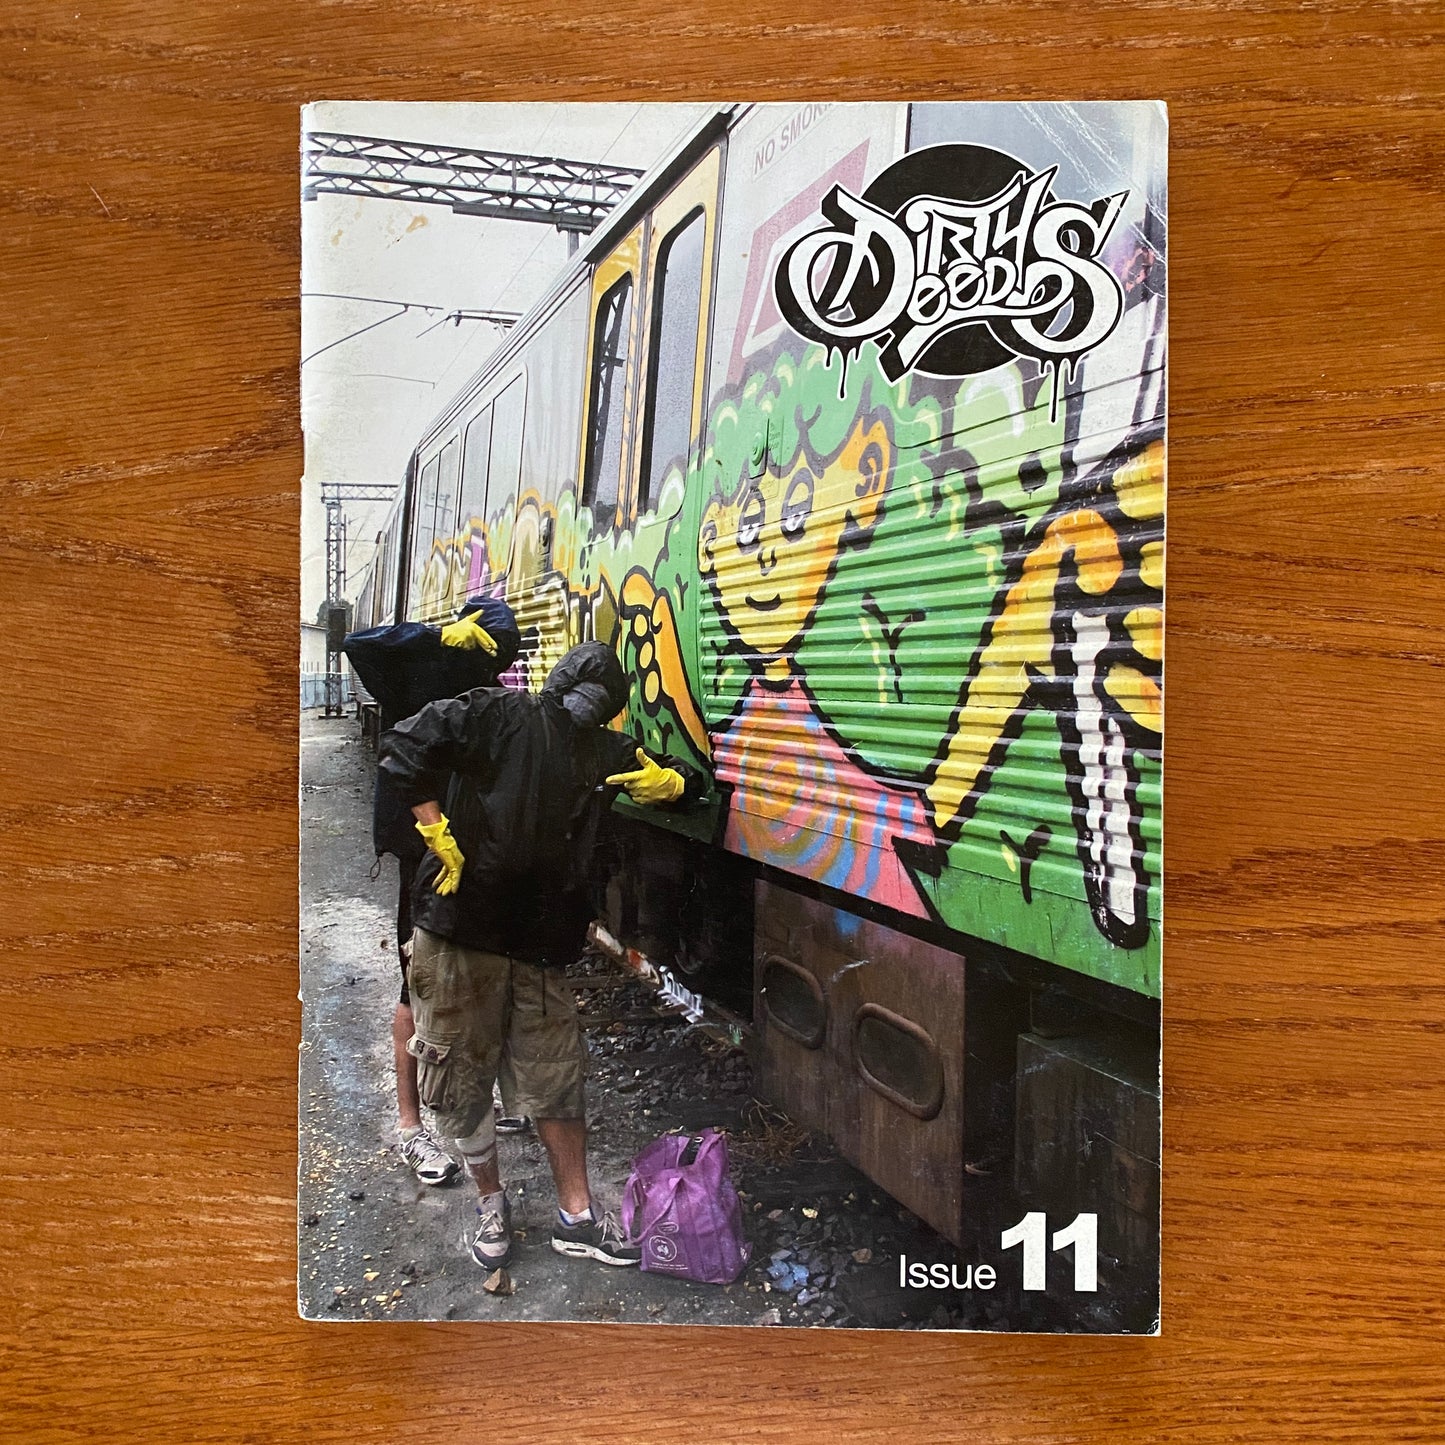 Dirty Deeds 11 Australian Graffiti Magazine